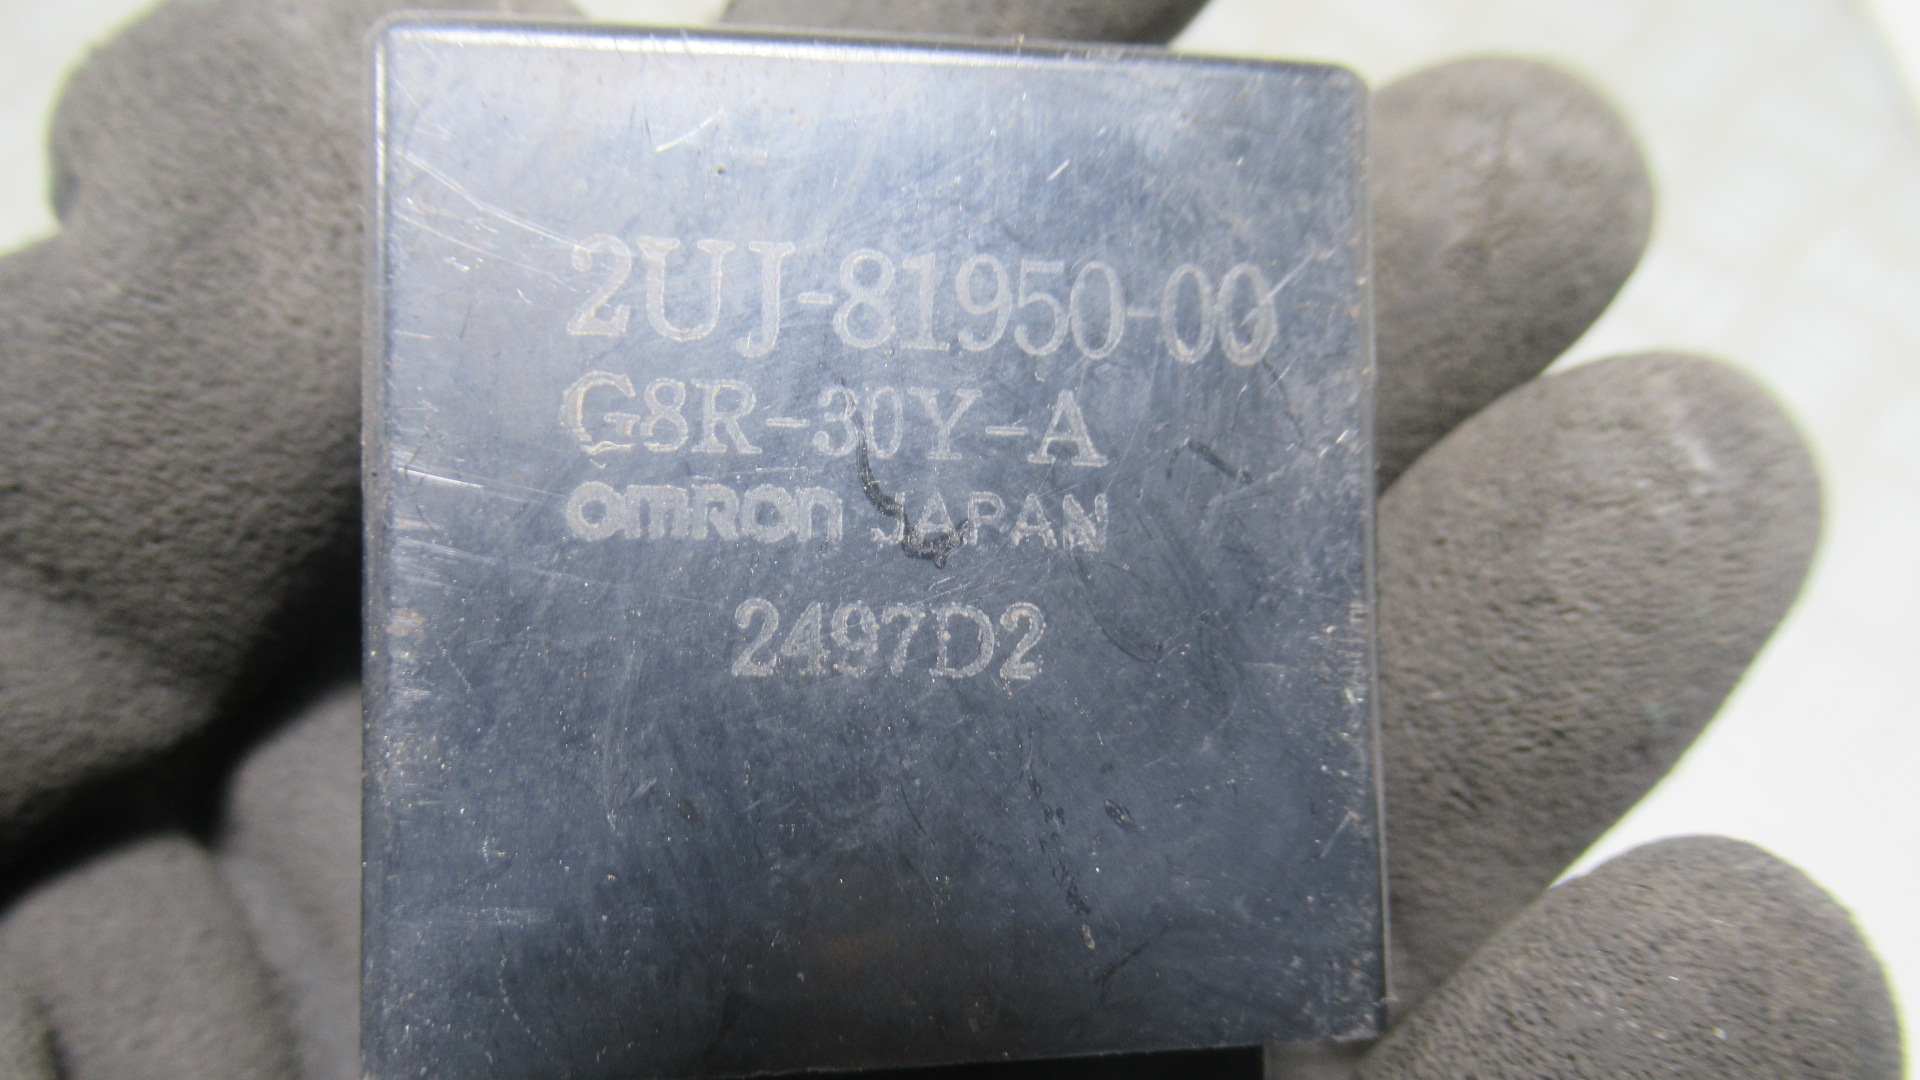 Relai pompe essence Yamaha Virago 125 4t (2UJ-81950-00) (omron)